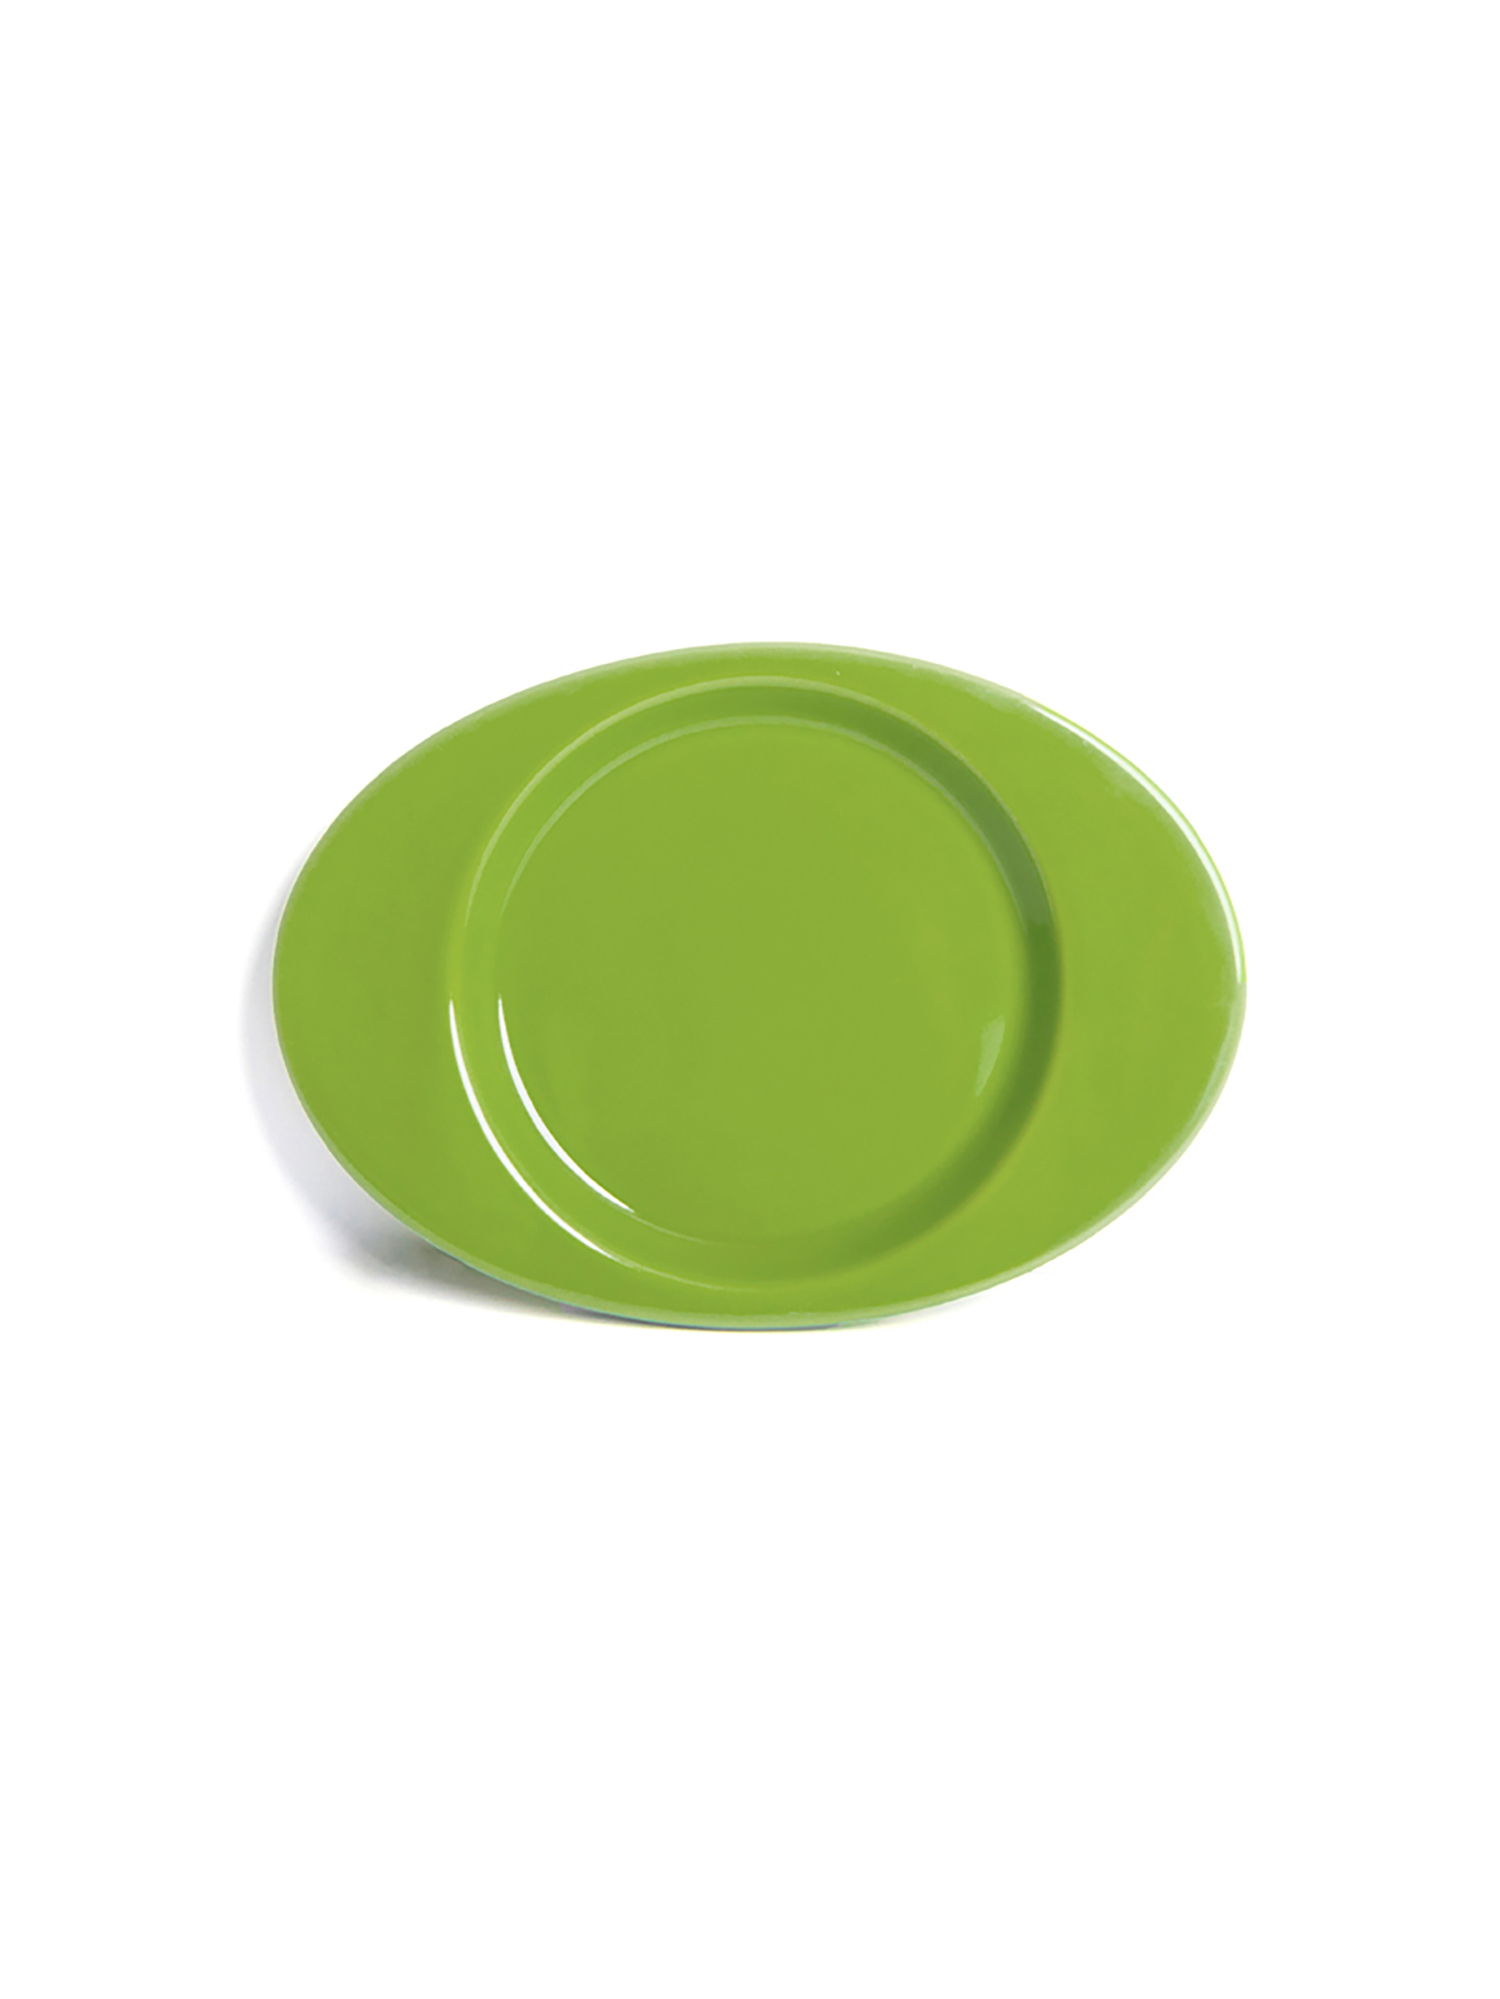 YEP Signature Plate - Apple Green